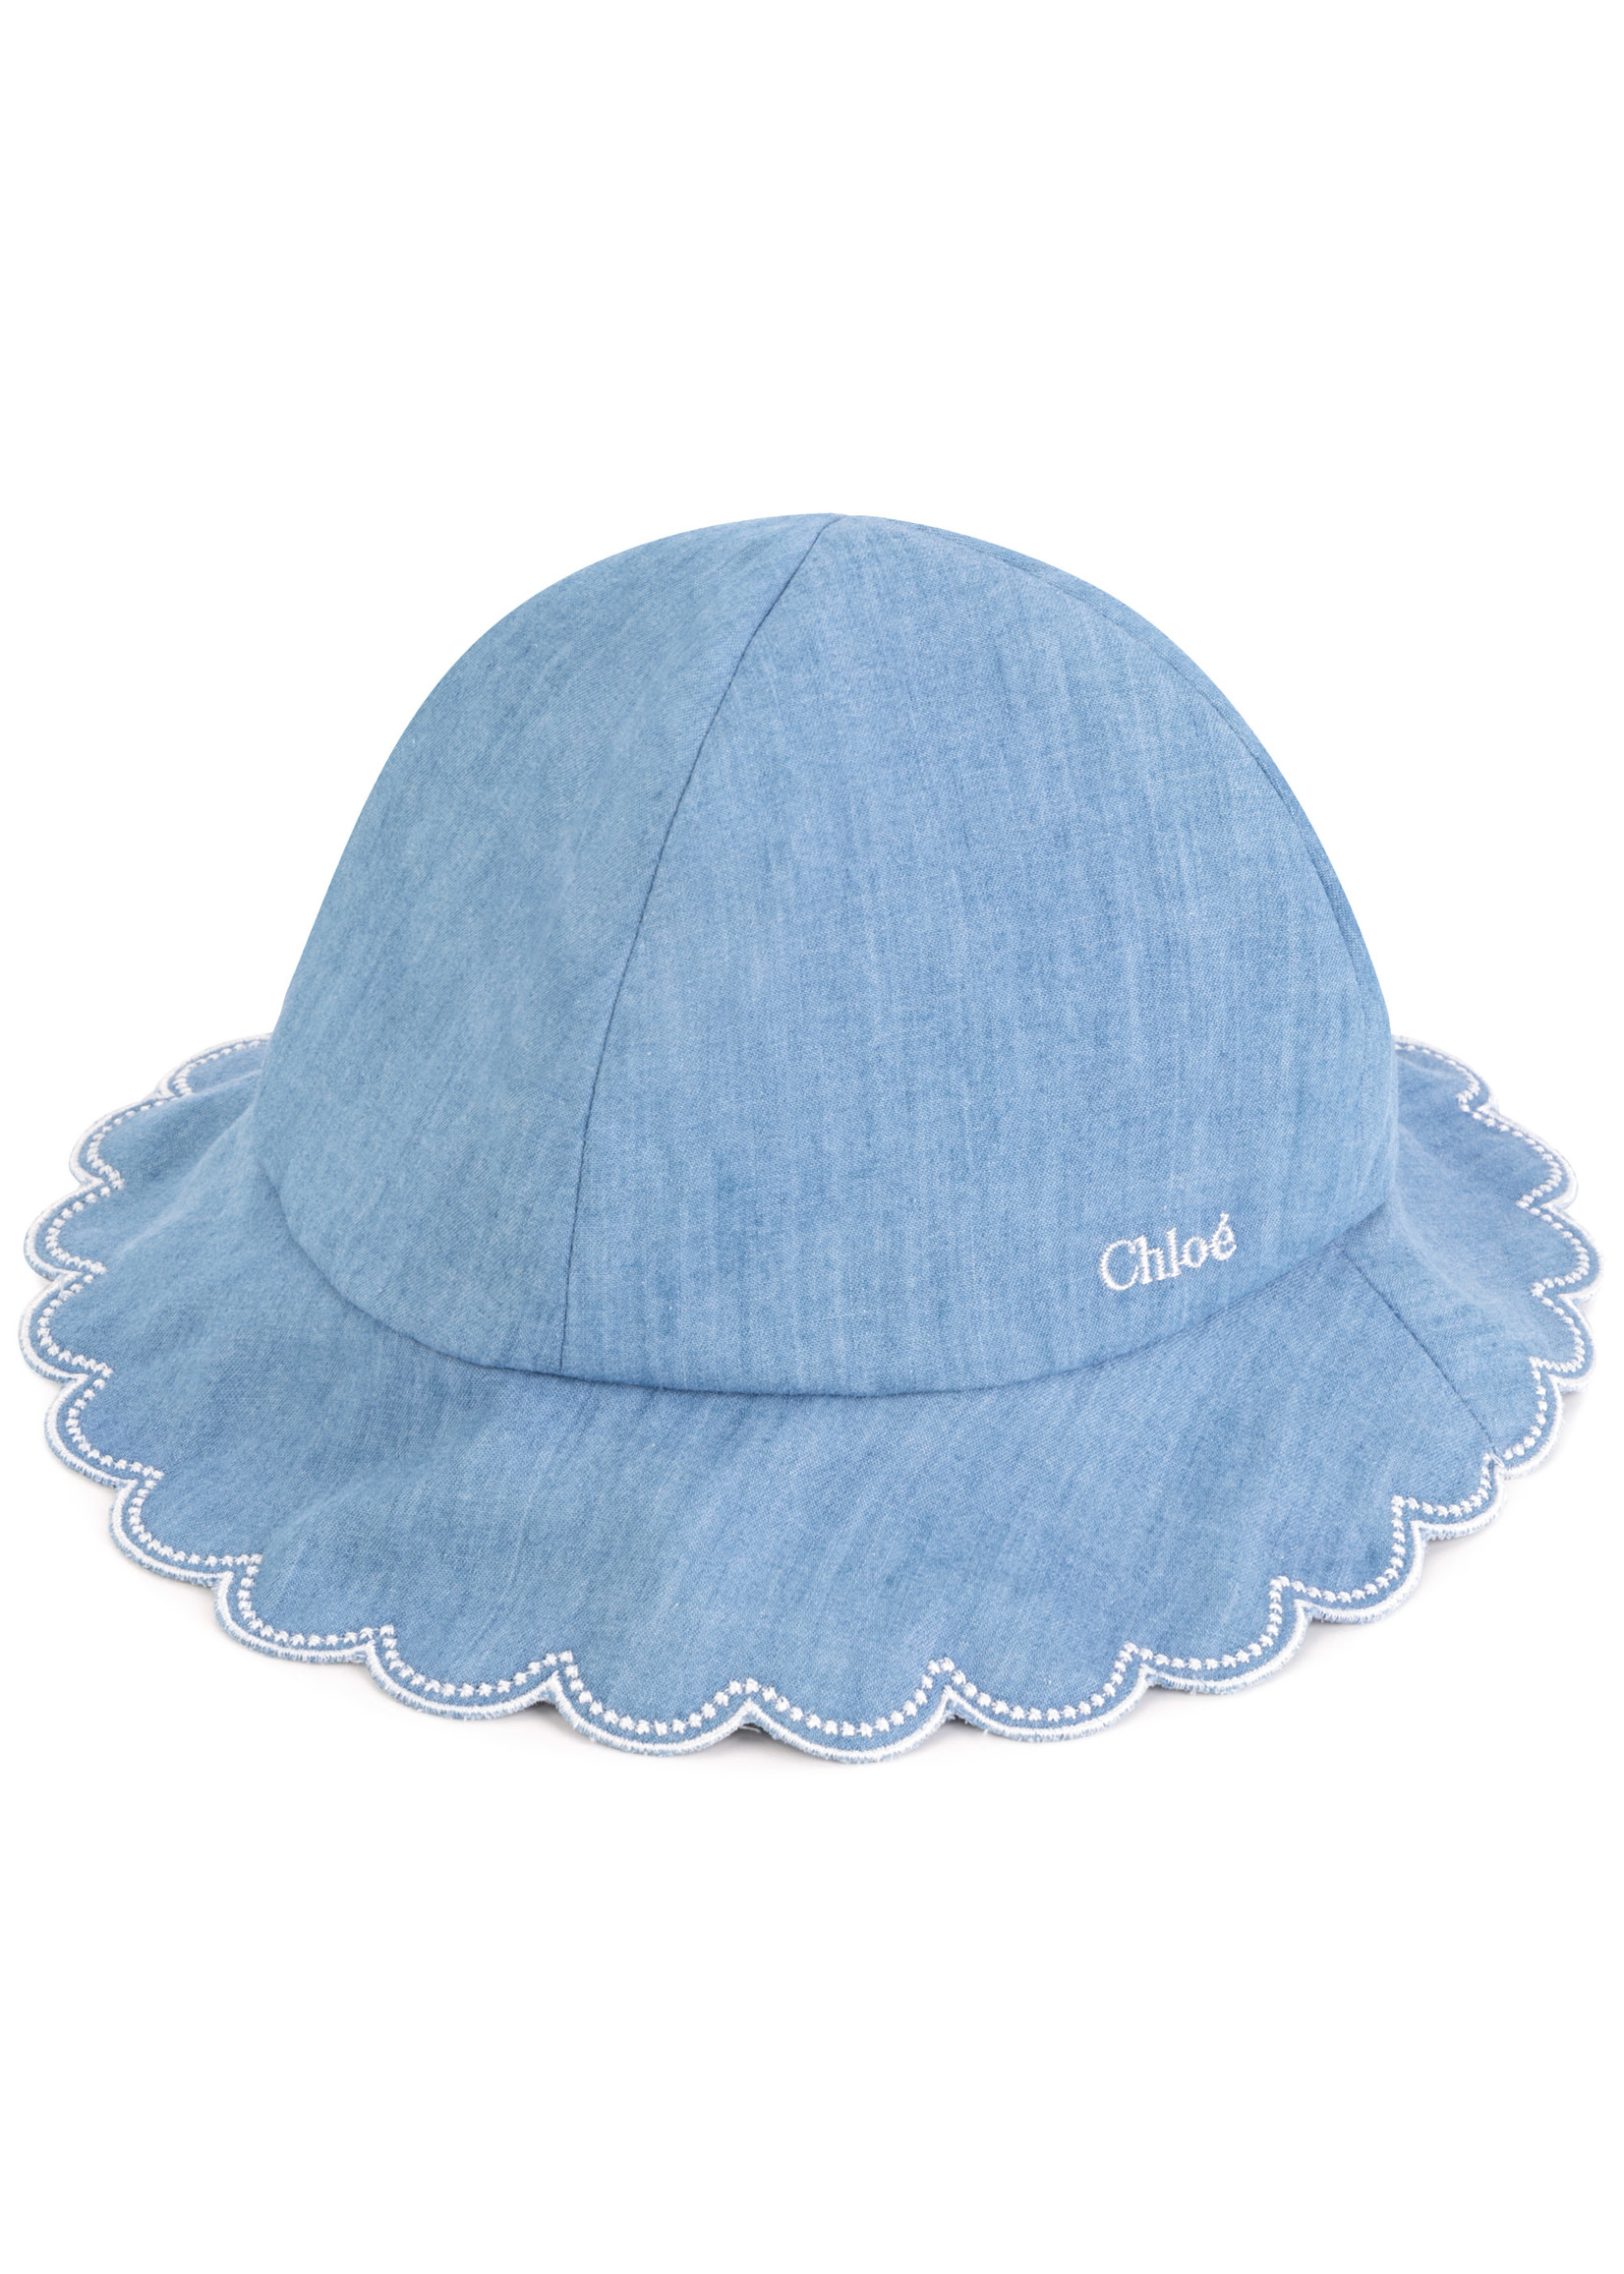 Chloé Chloé Babygirl denim sun hat light blue - C01049